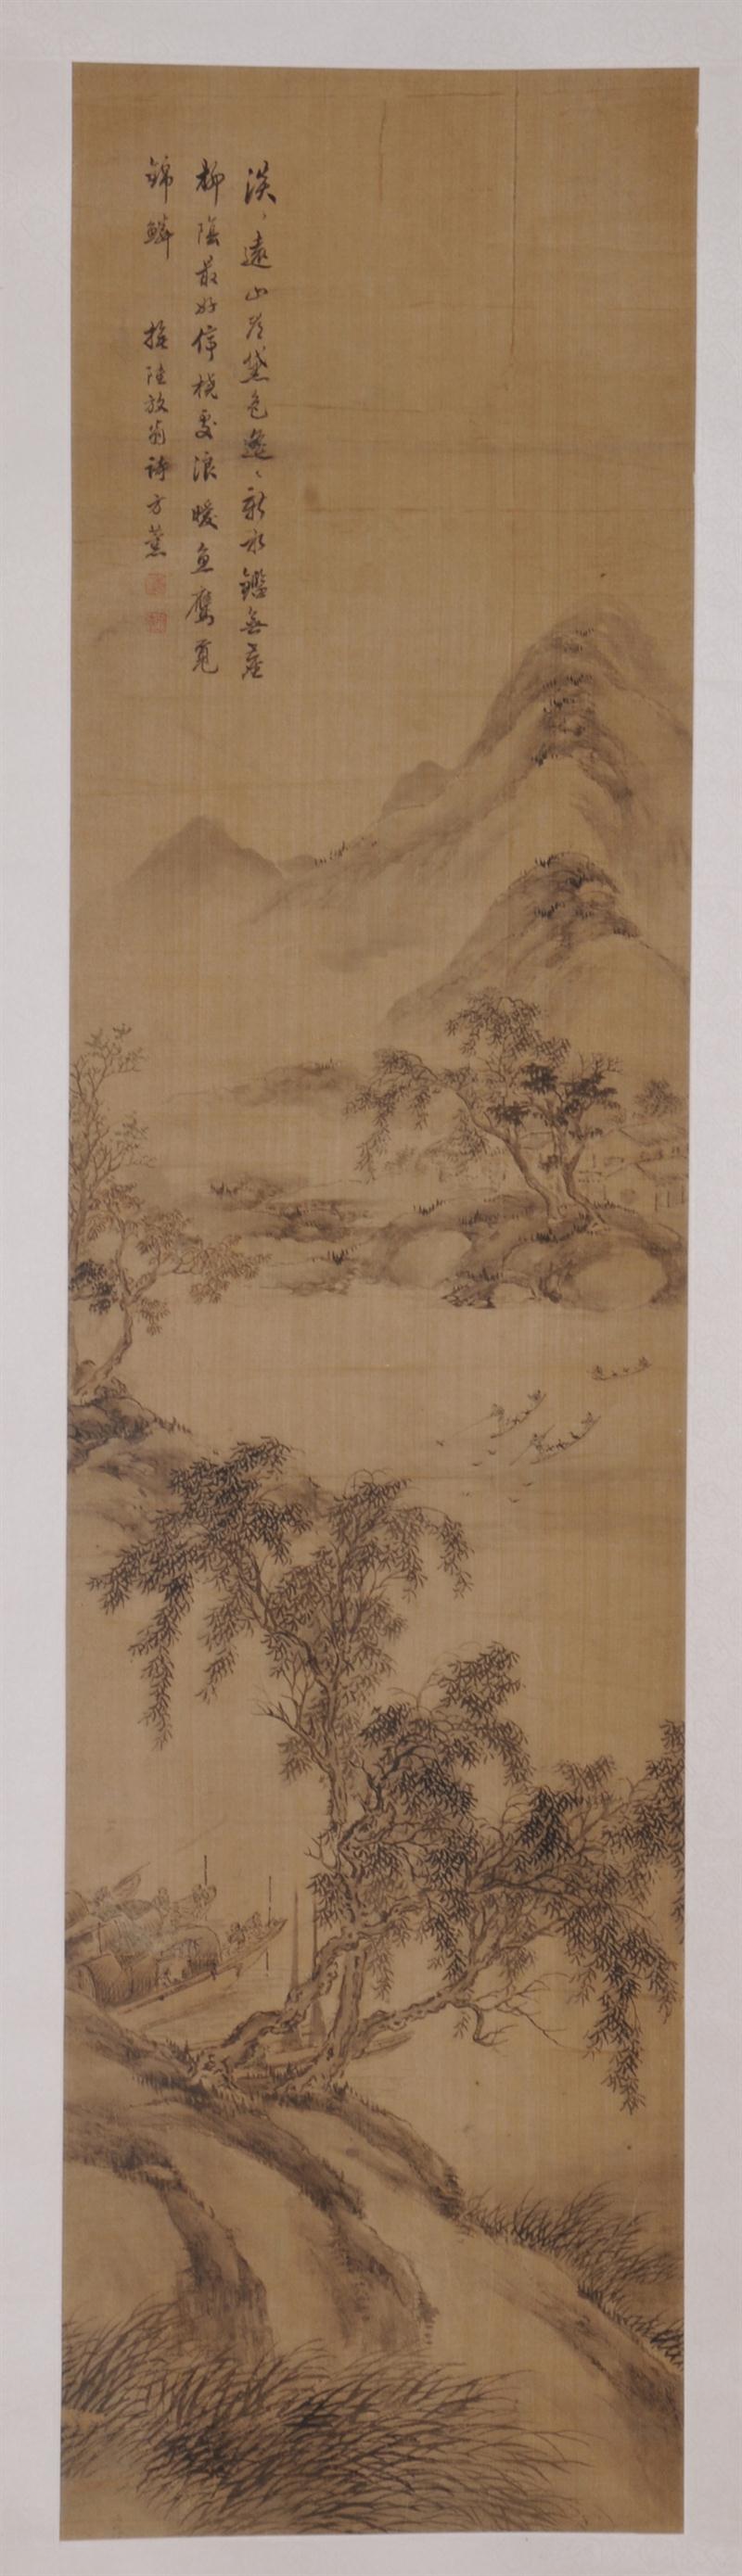 FANG XUN CHINESE 1736 1799 RIVERSCAPE 13db81